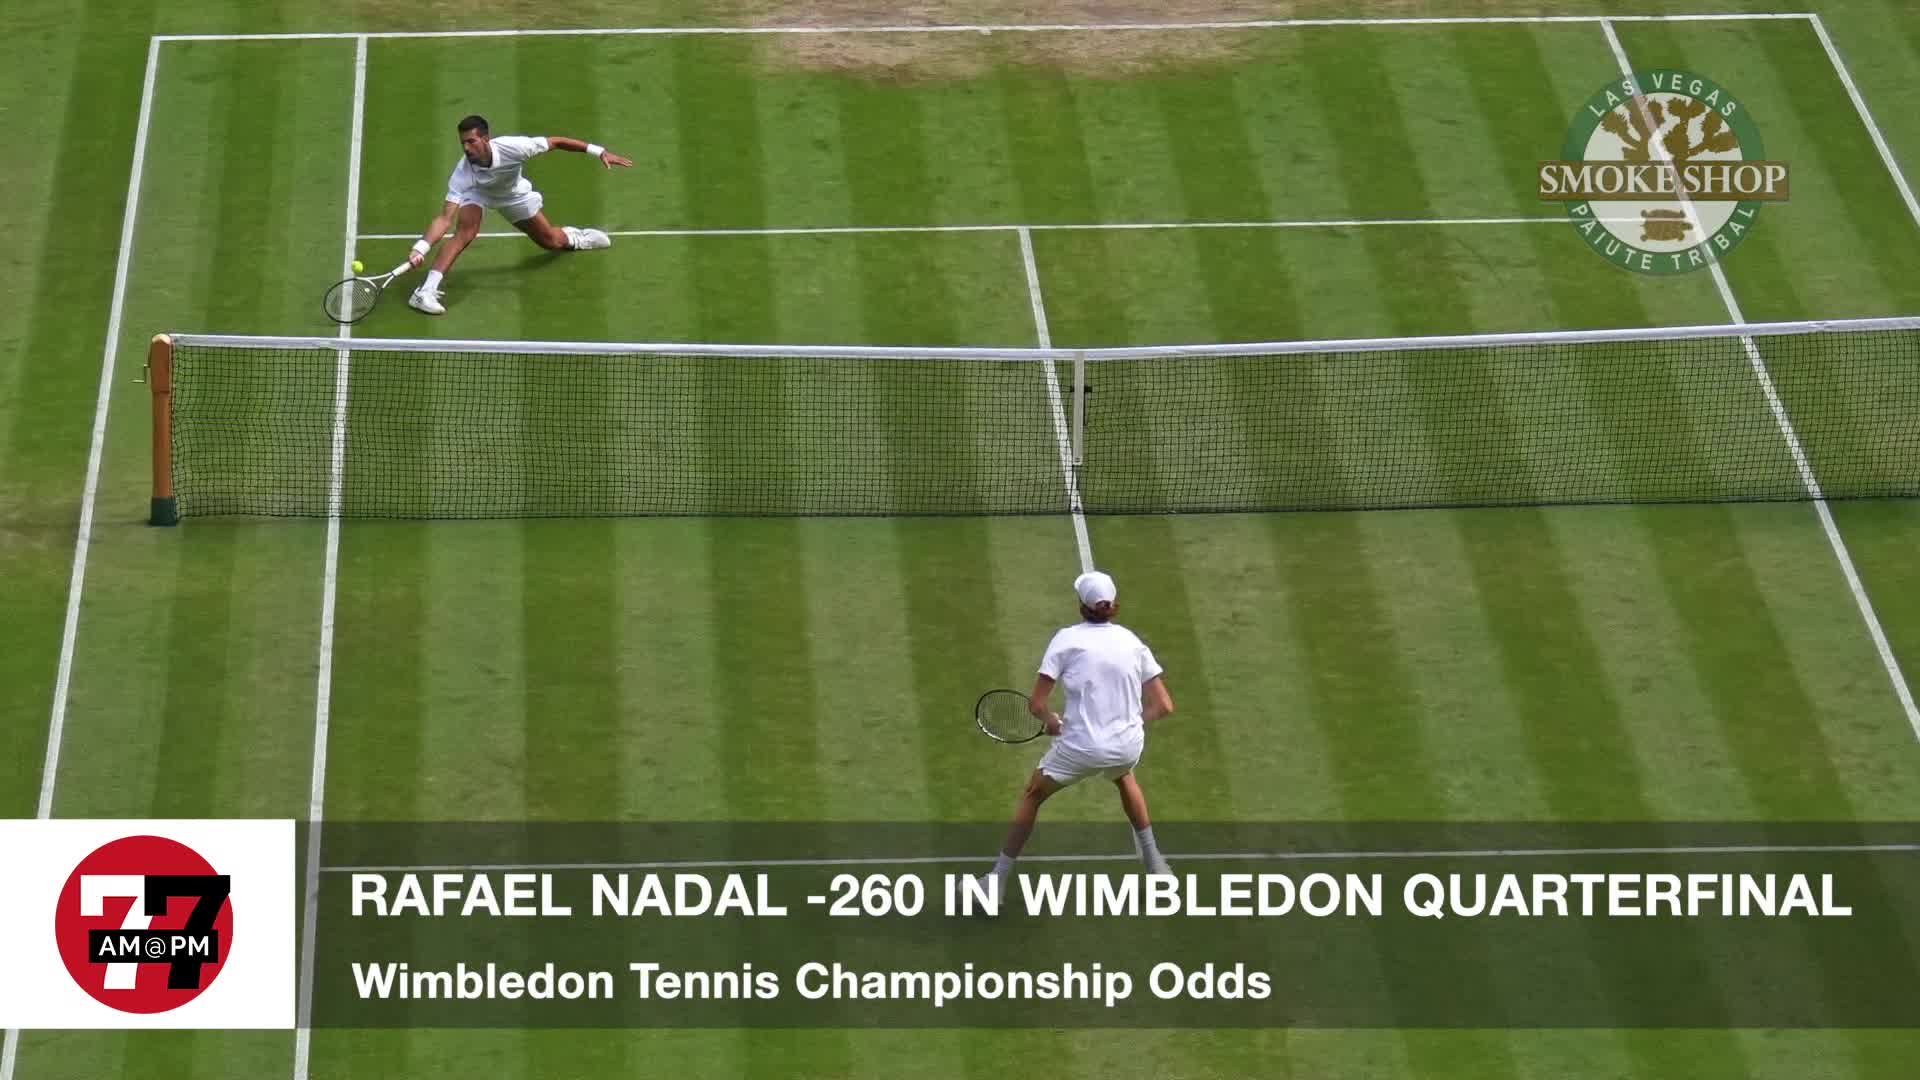 Rafael Nadal -260 in Wimbeldon Quarterfinal